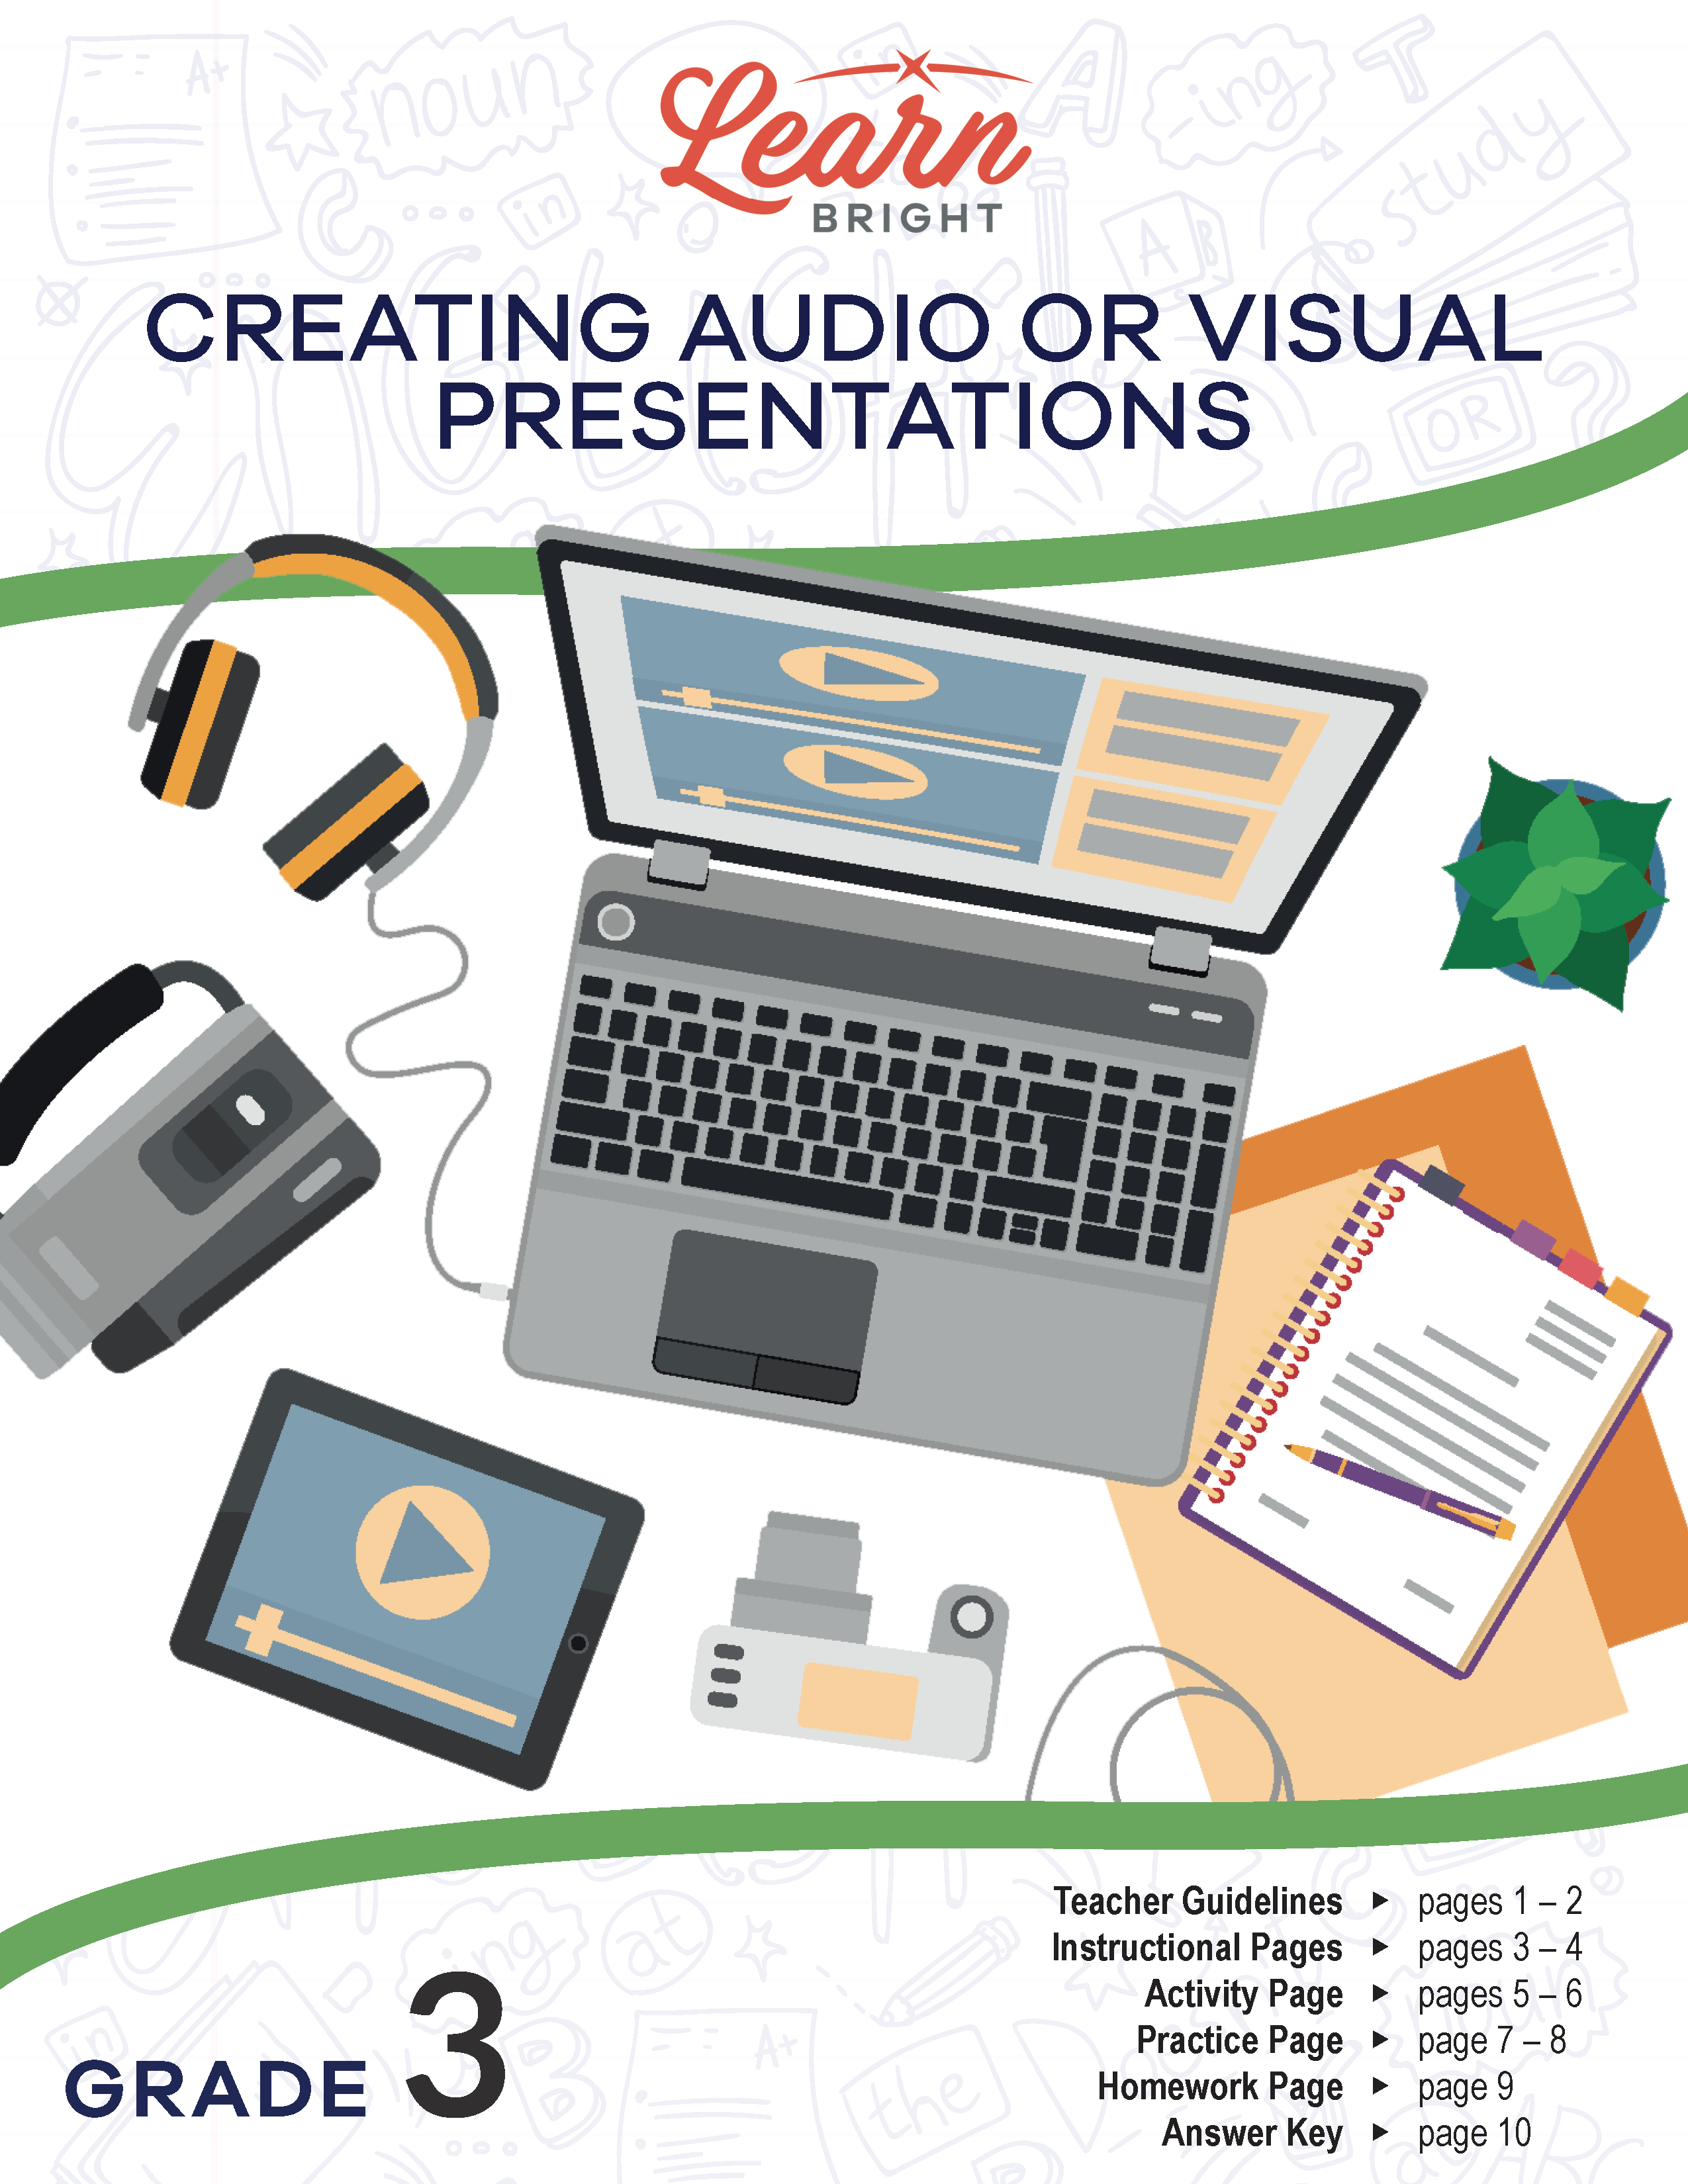 how to prepare audio visual presentation